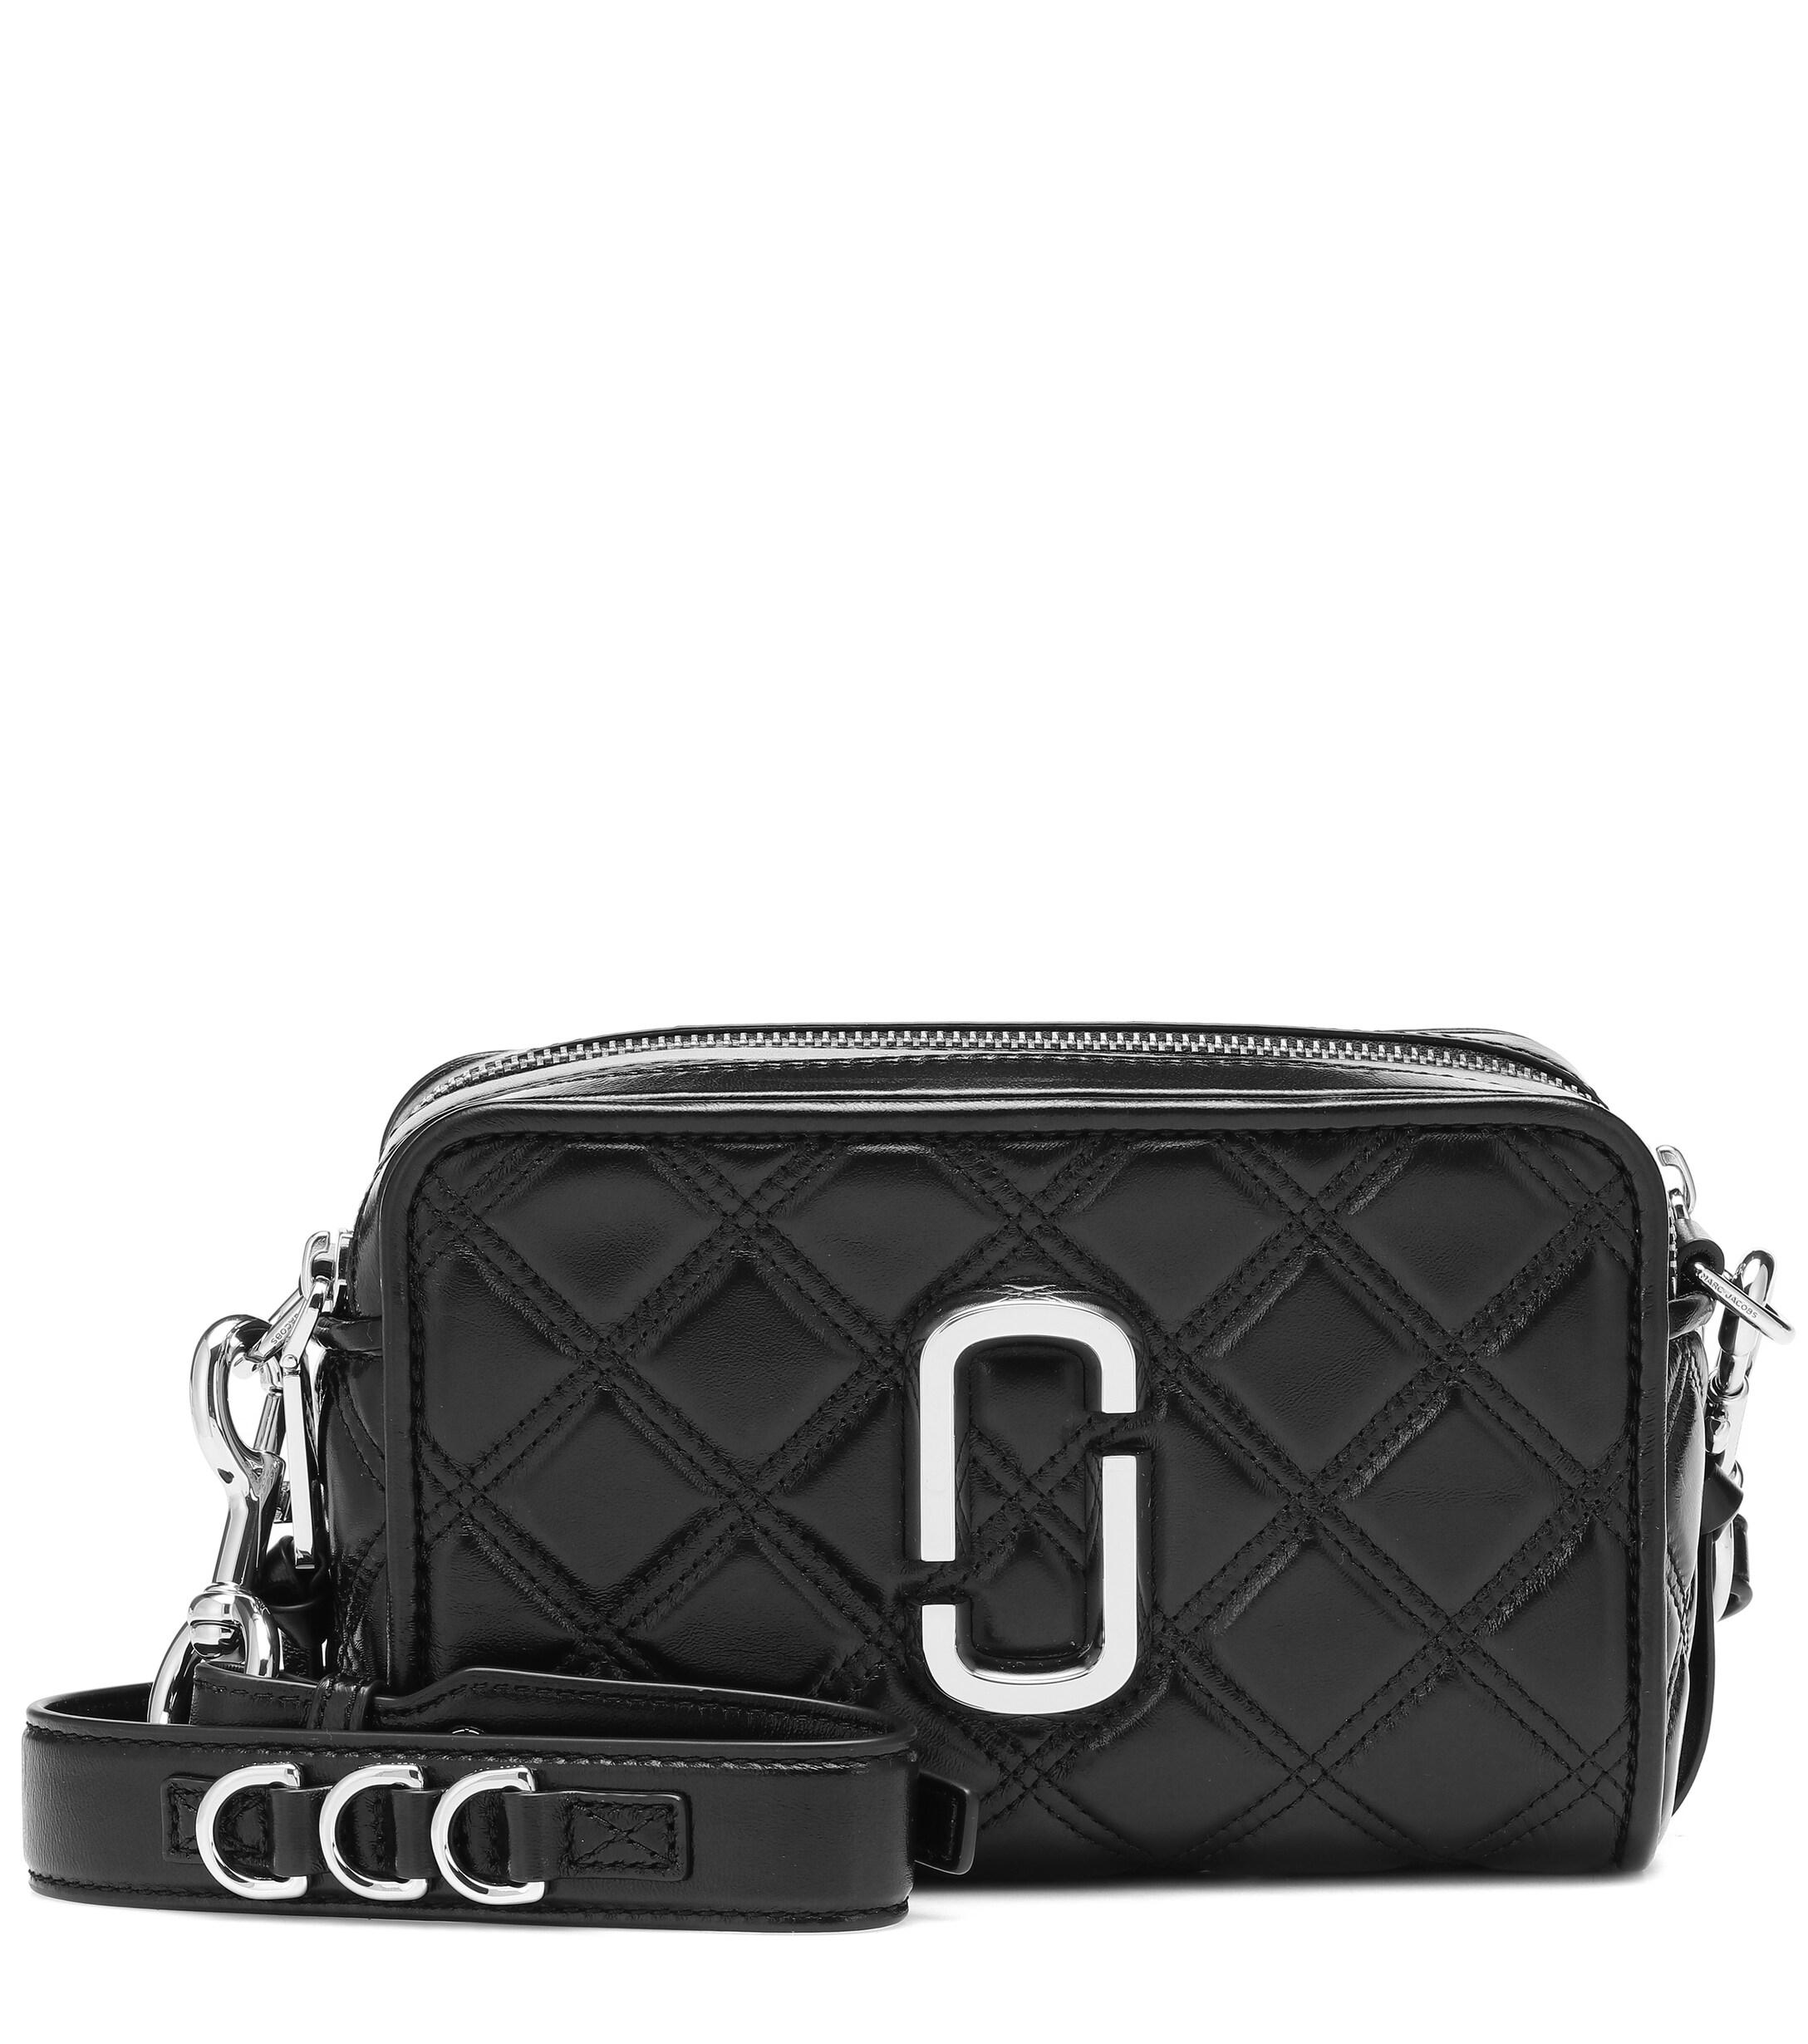 Marc Jacobs Softshot 21 Leather Crossbody Bag in Black - Lyst